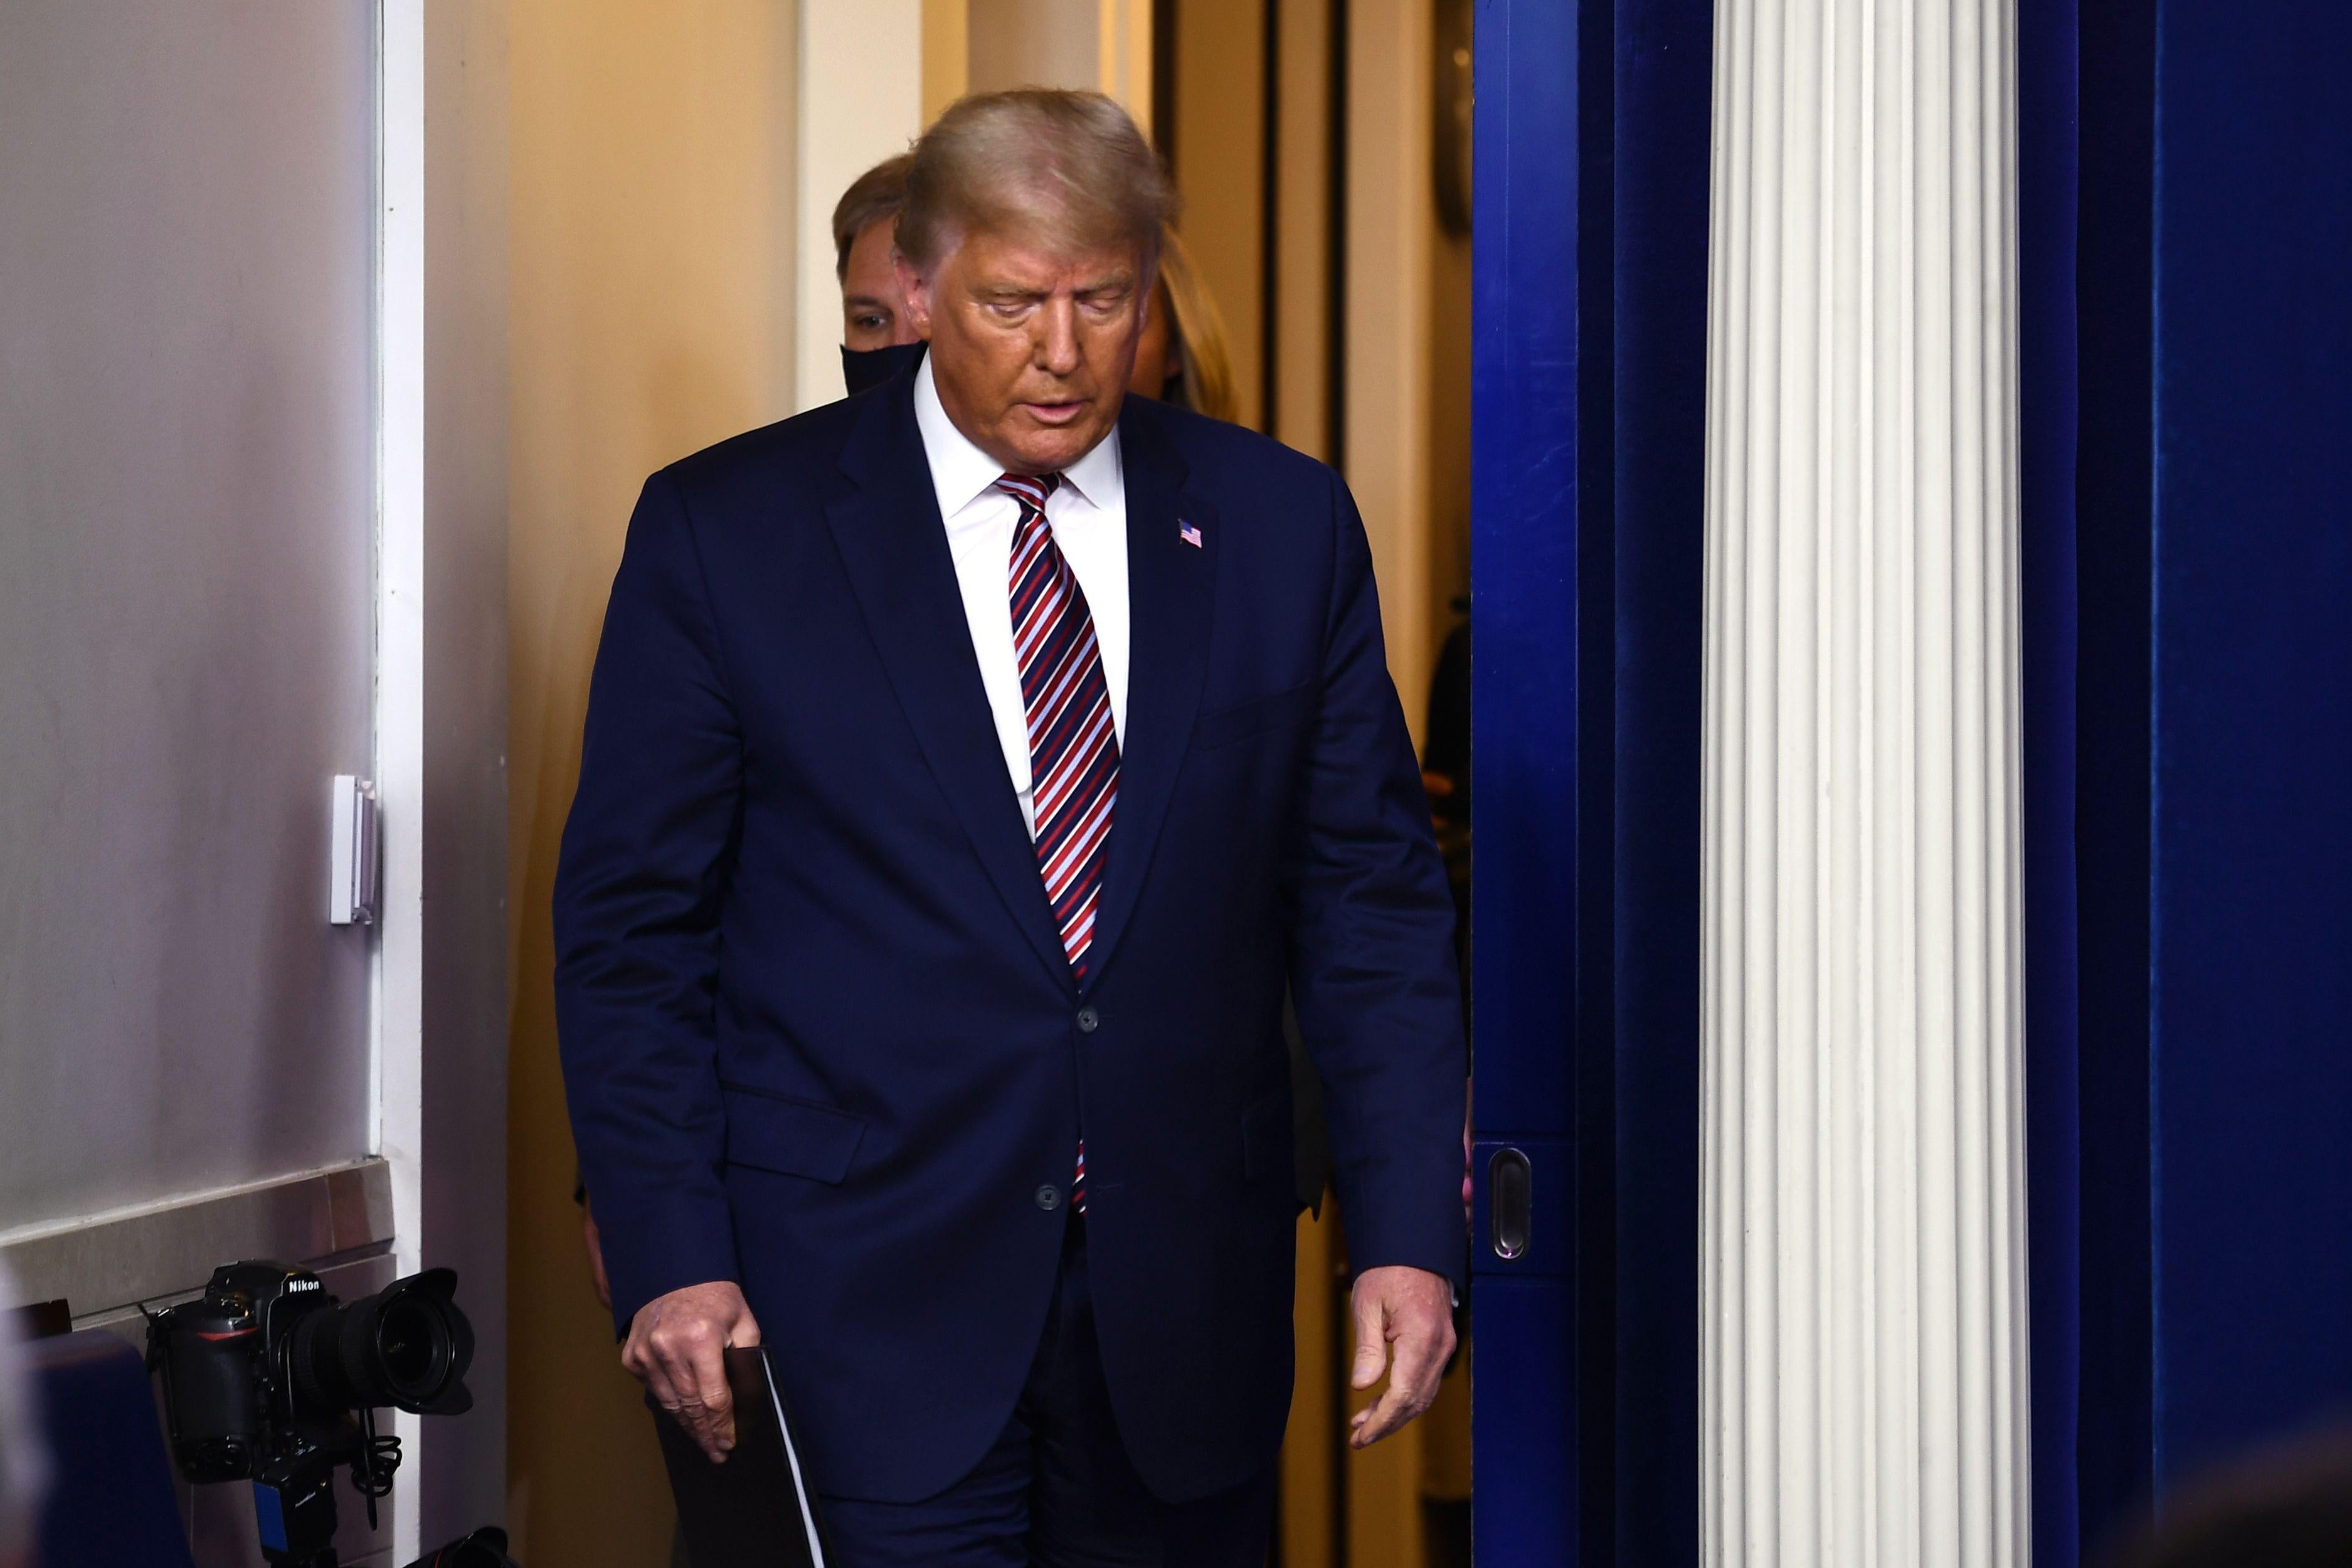 Donald Trump looks down as he walks.